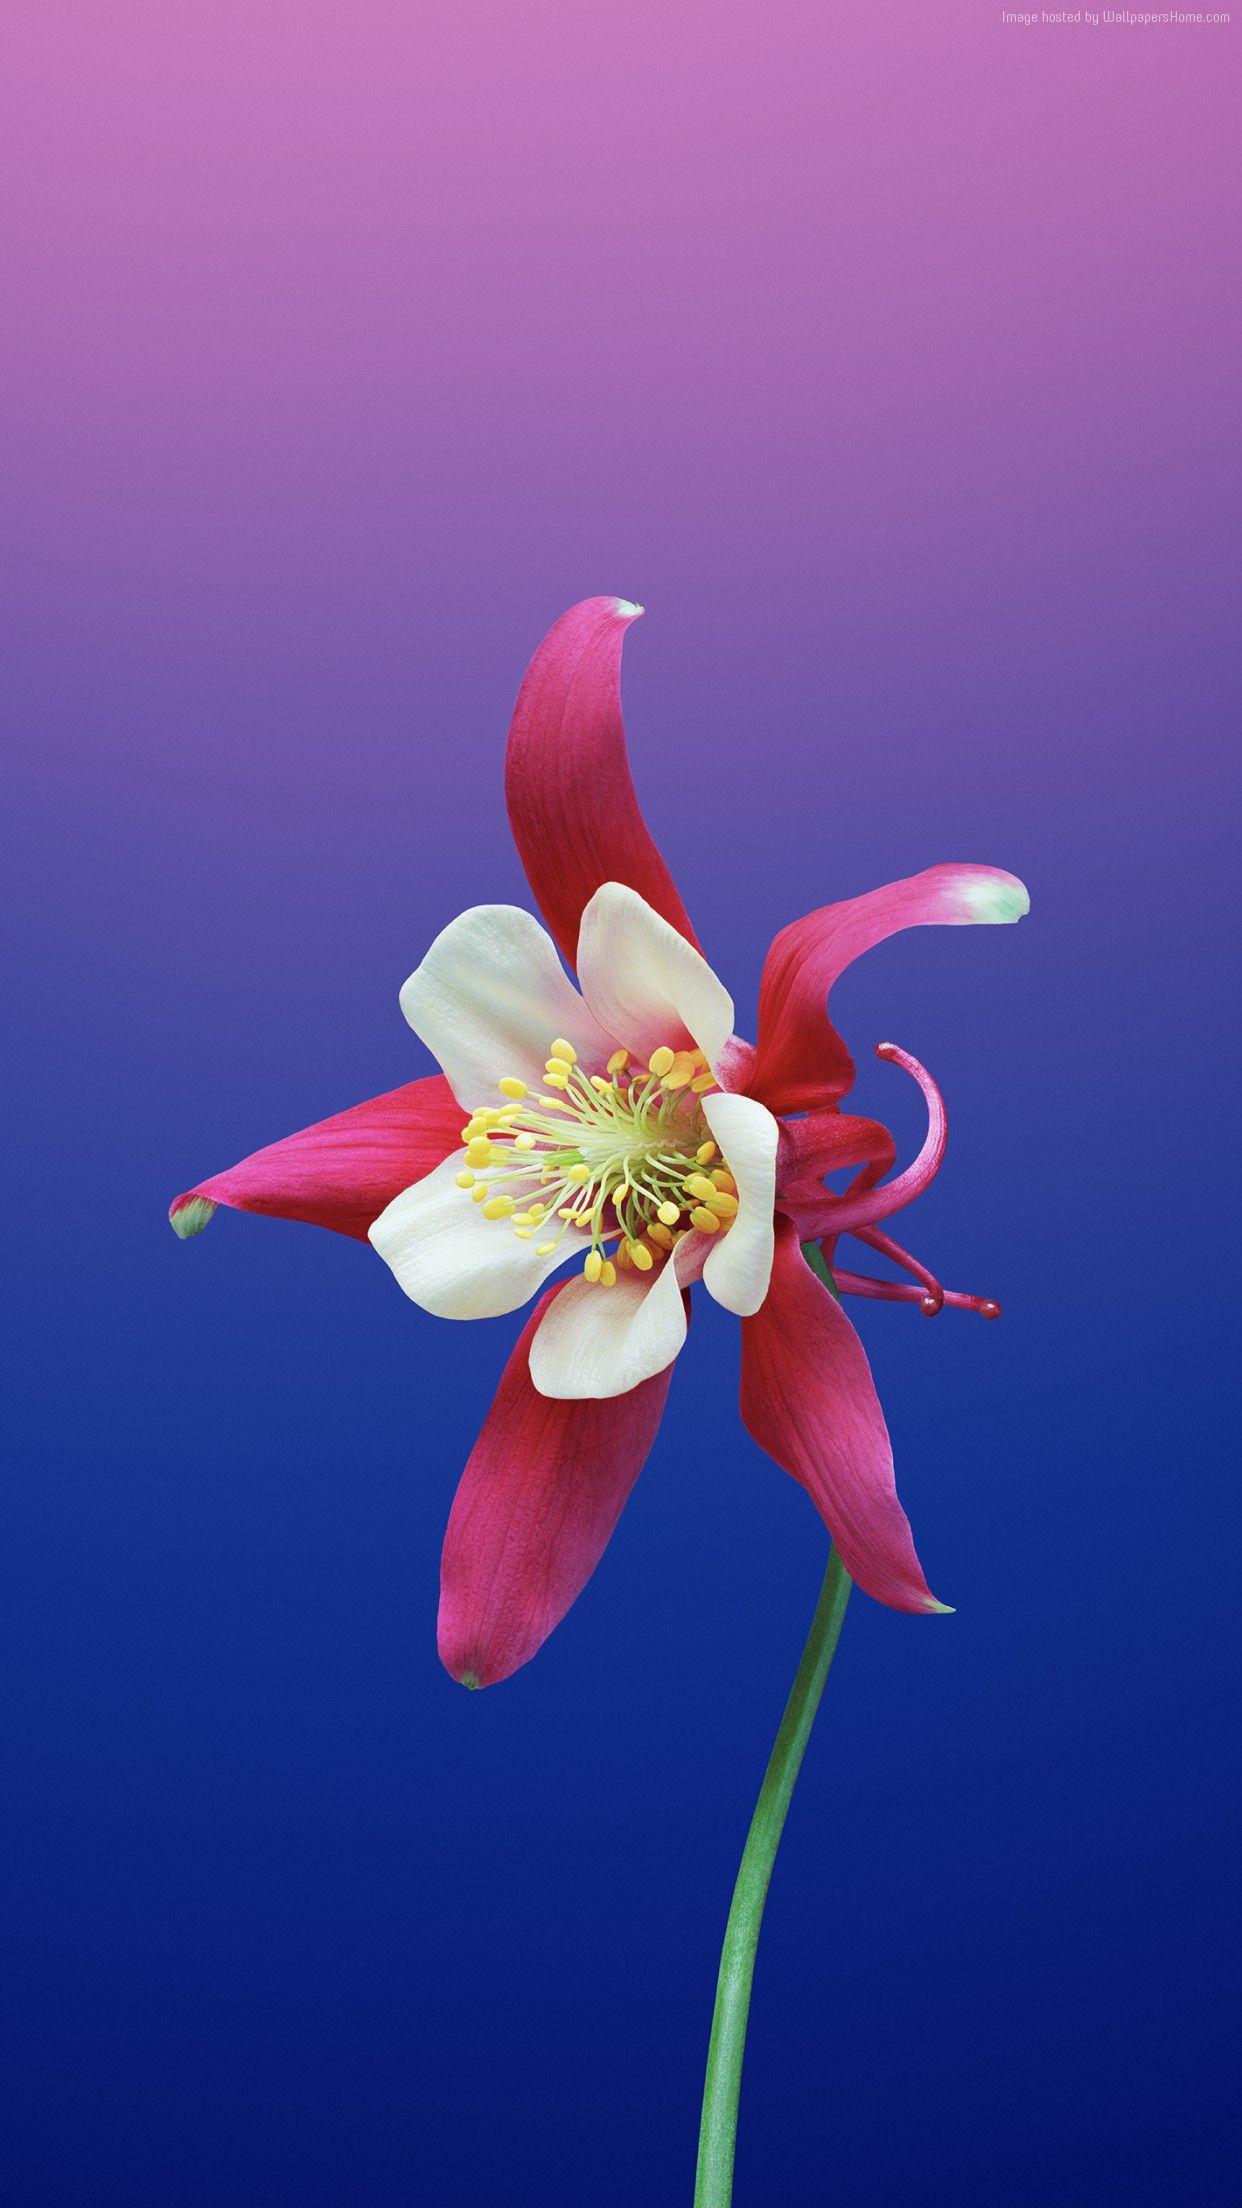 10 Free flower wallpapers for iPhone in 2023 (HD & 4K) - iGeeksBlog